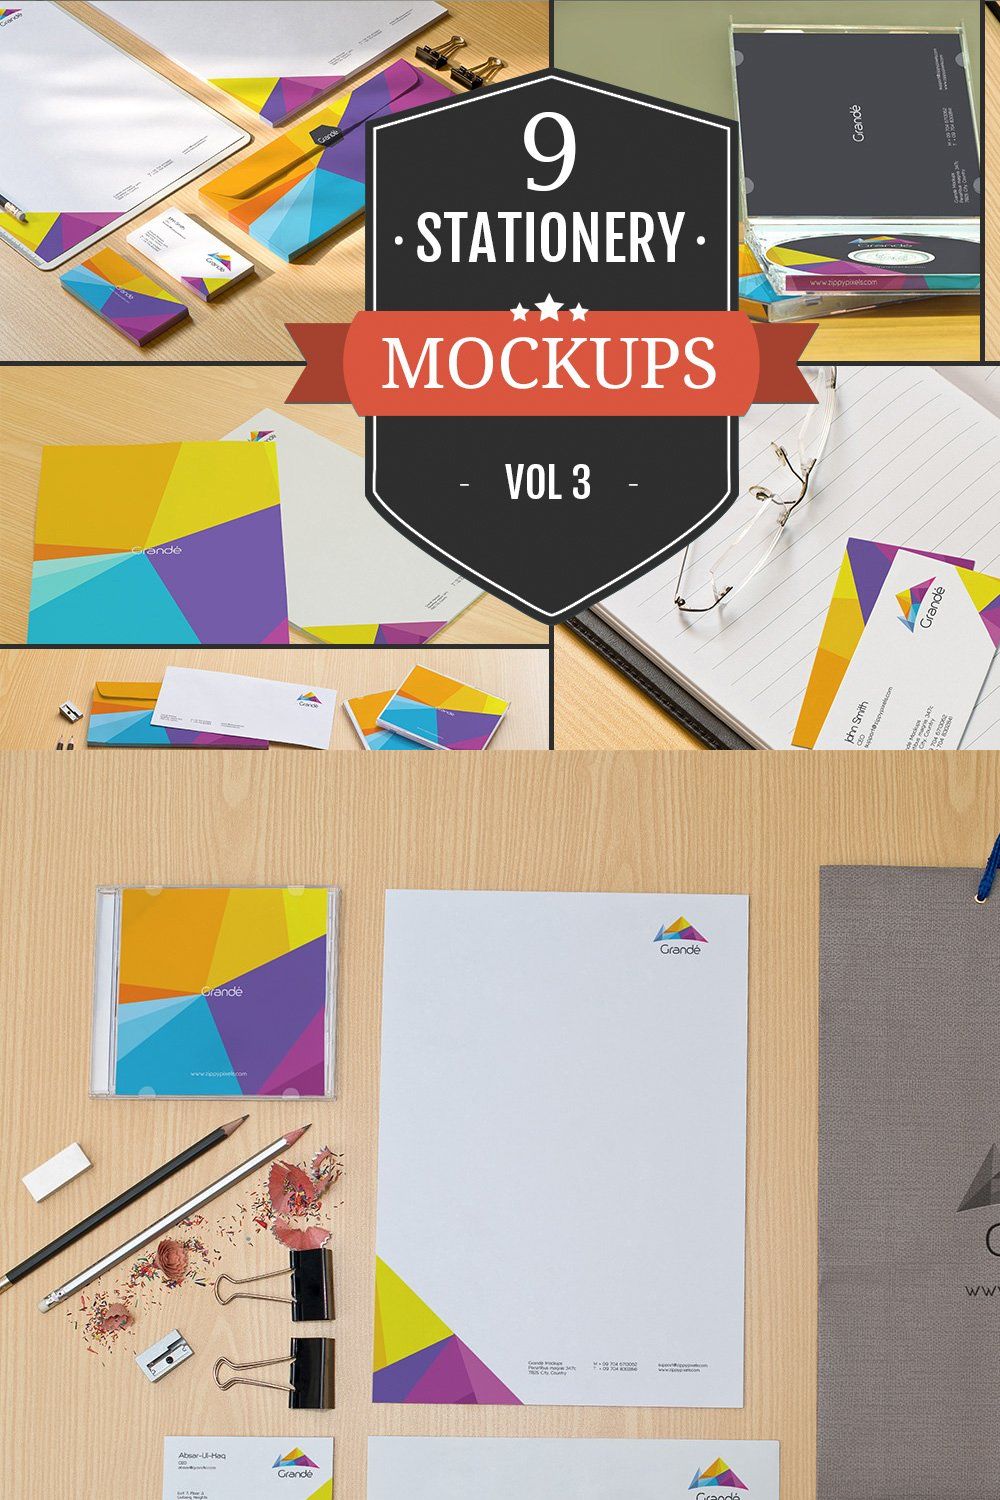 Branding Stationery Mockups Vol. 3 pinterest preview image.